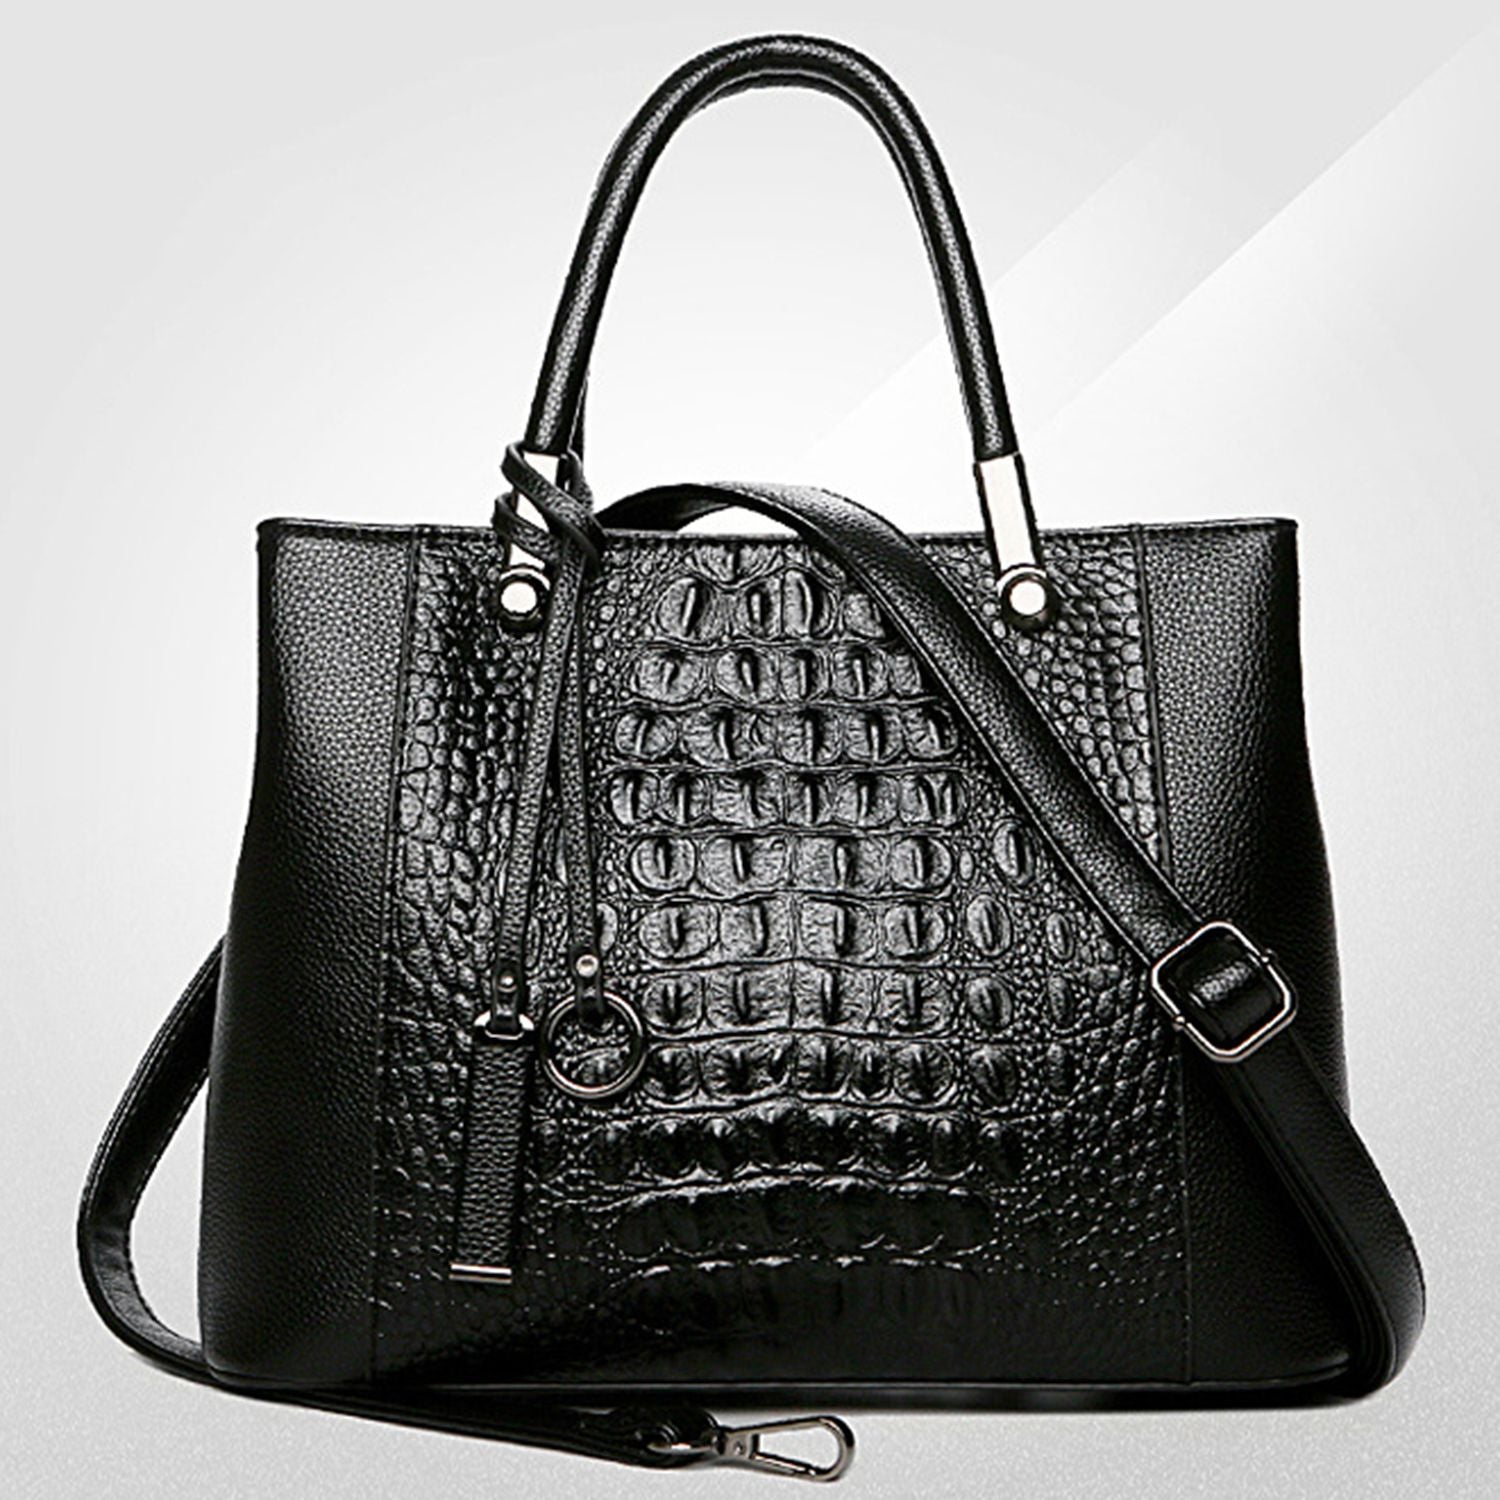 Aibkhk Leather Handbags Alligator Shoulder Crossbody Bags For Women Black Large Totes Ladies Messenger Bag - ebowsos